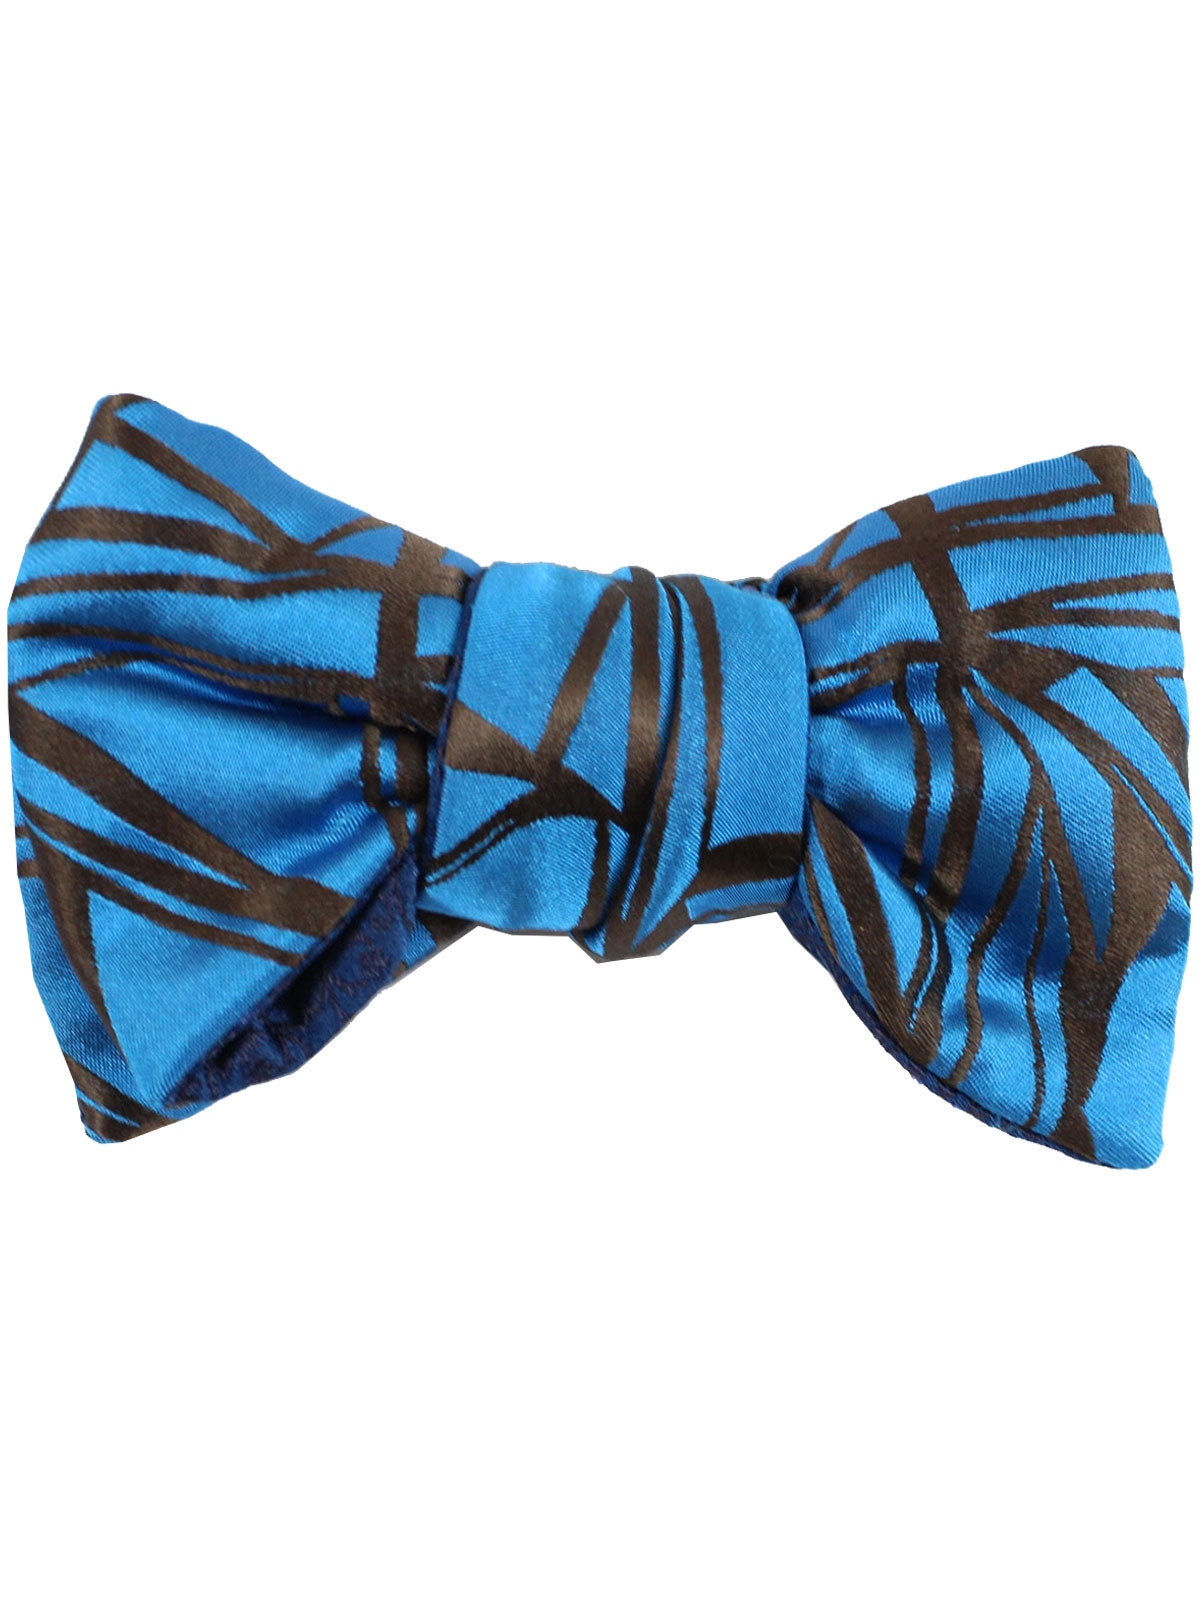 Le Noeud Papillon Silk Bow Tie Blue Black Design - Self Tie